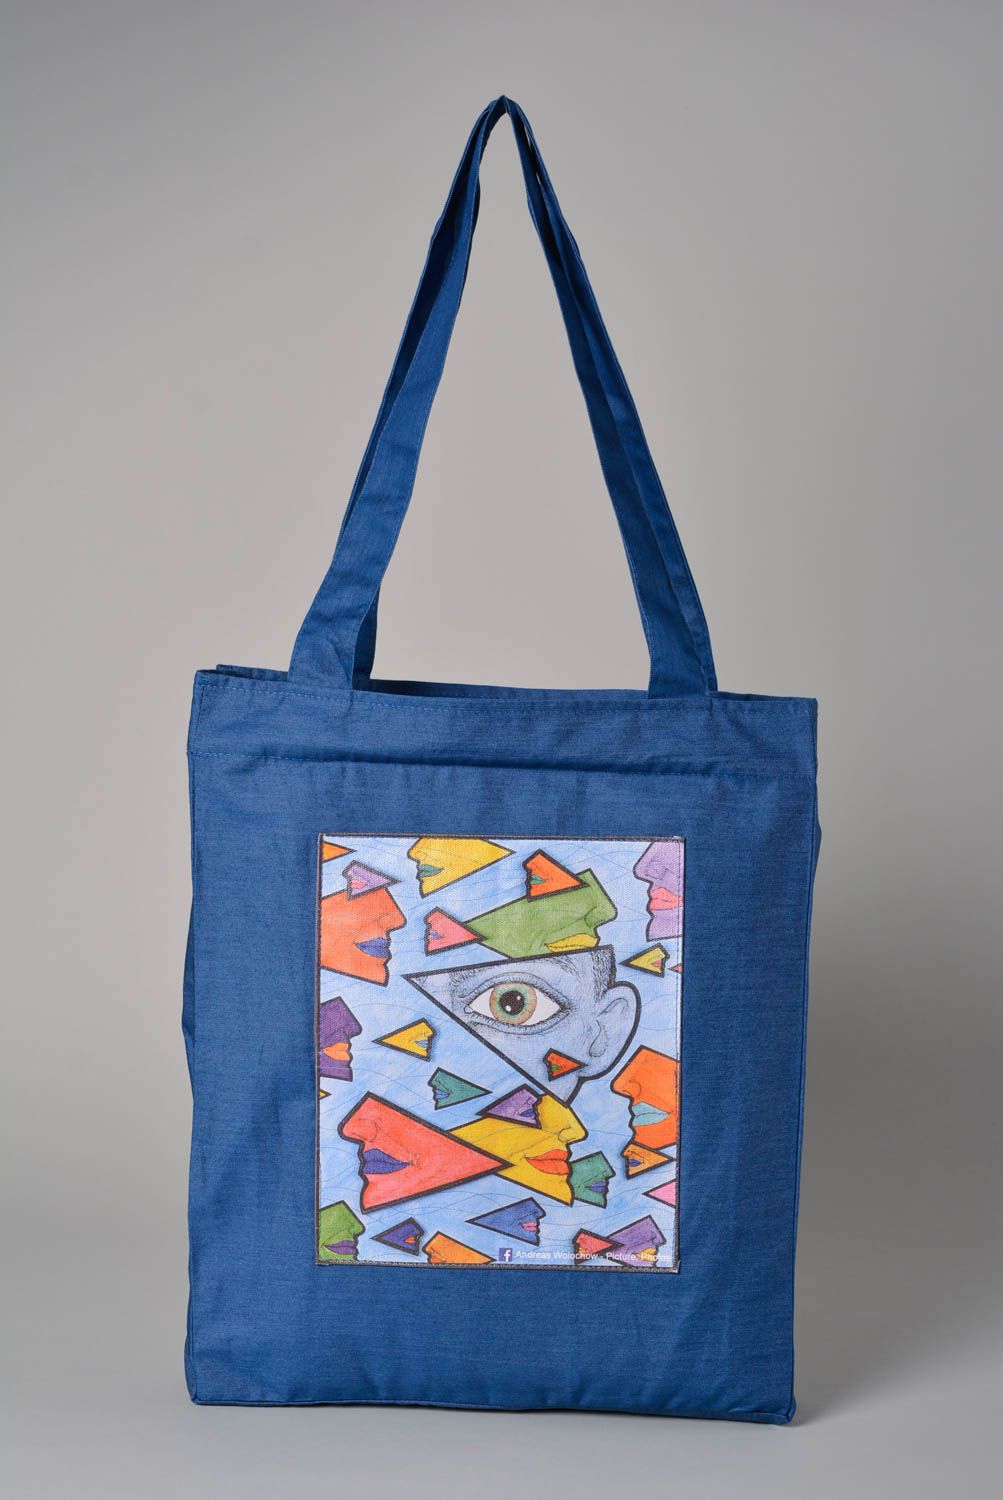 Stylish handmade fabric bag textile handbag shoulder bag casual style gift ideas photo 1